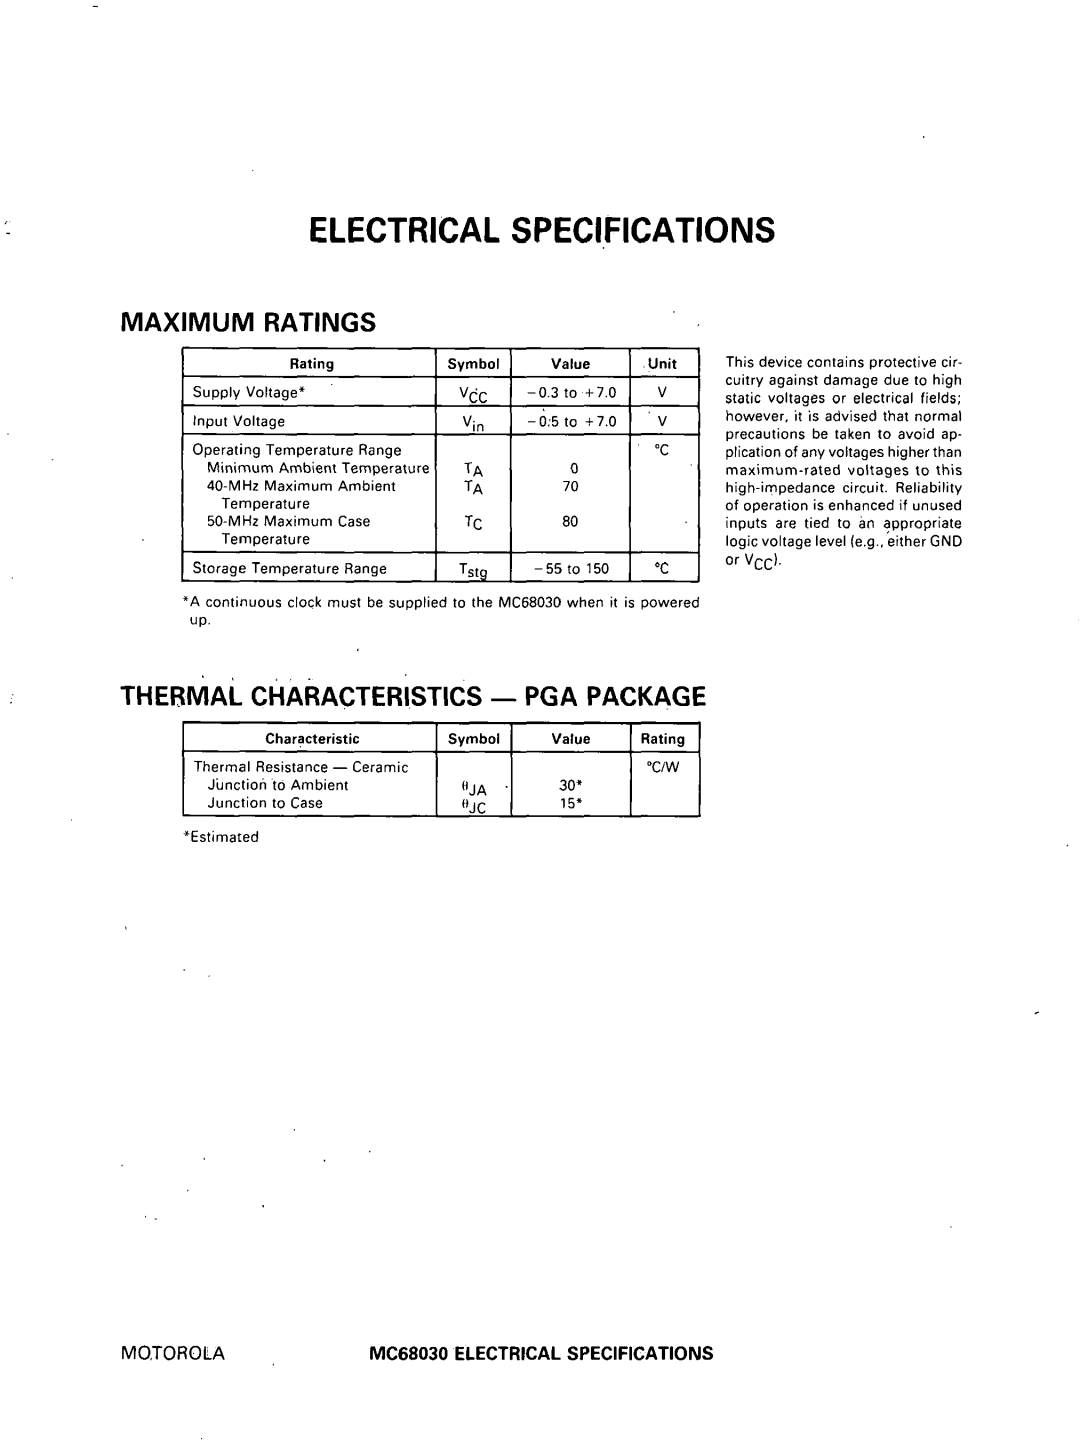 Motorola MC68030 Electrical Specifications, Maximum Ratings, Thermal Characteristics- Pga Package, Value, Unit 